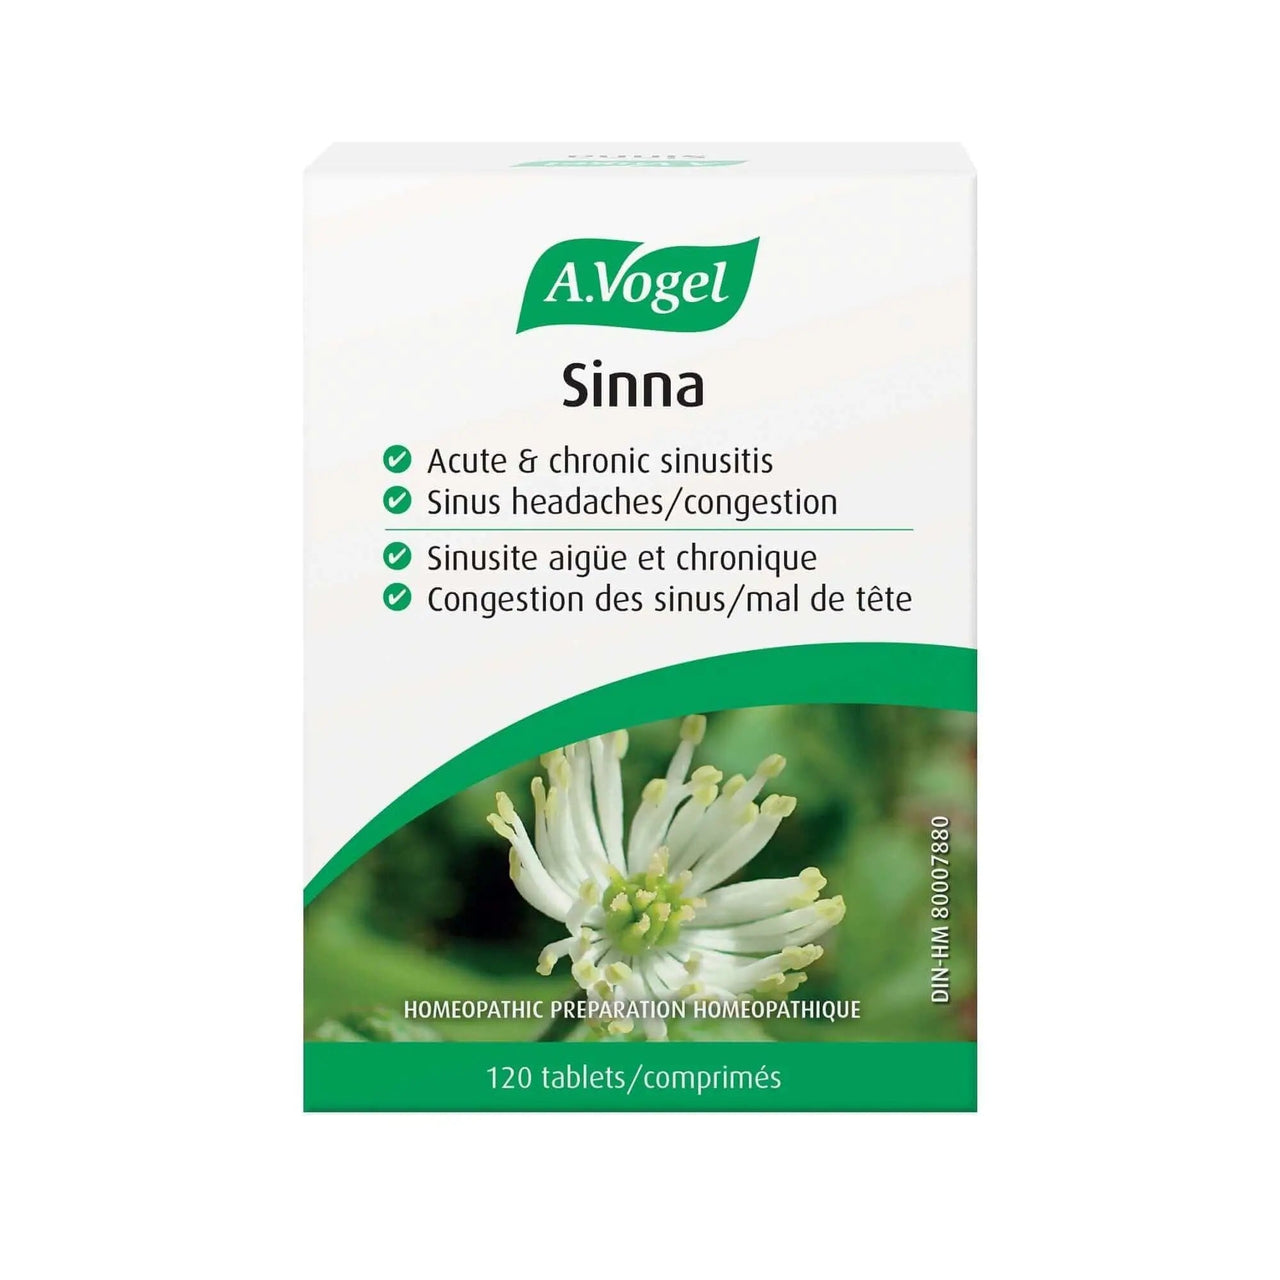 A. Vogel Sinna Tablets for Sinus congestion 120 Tablets - Nutrition Plus